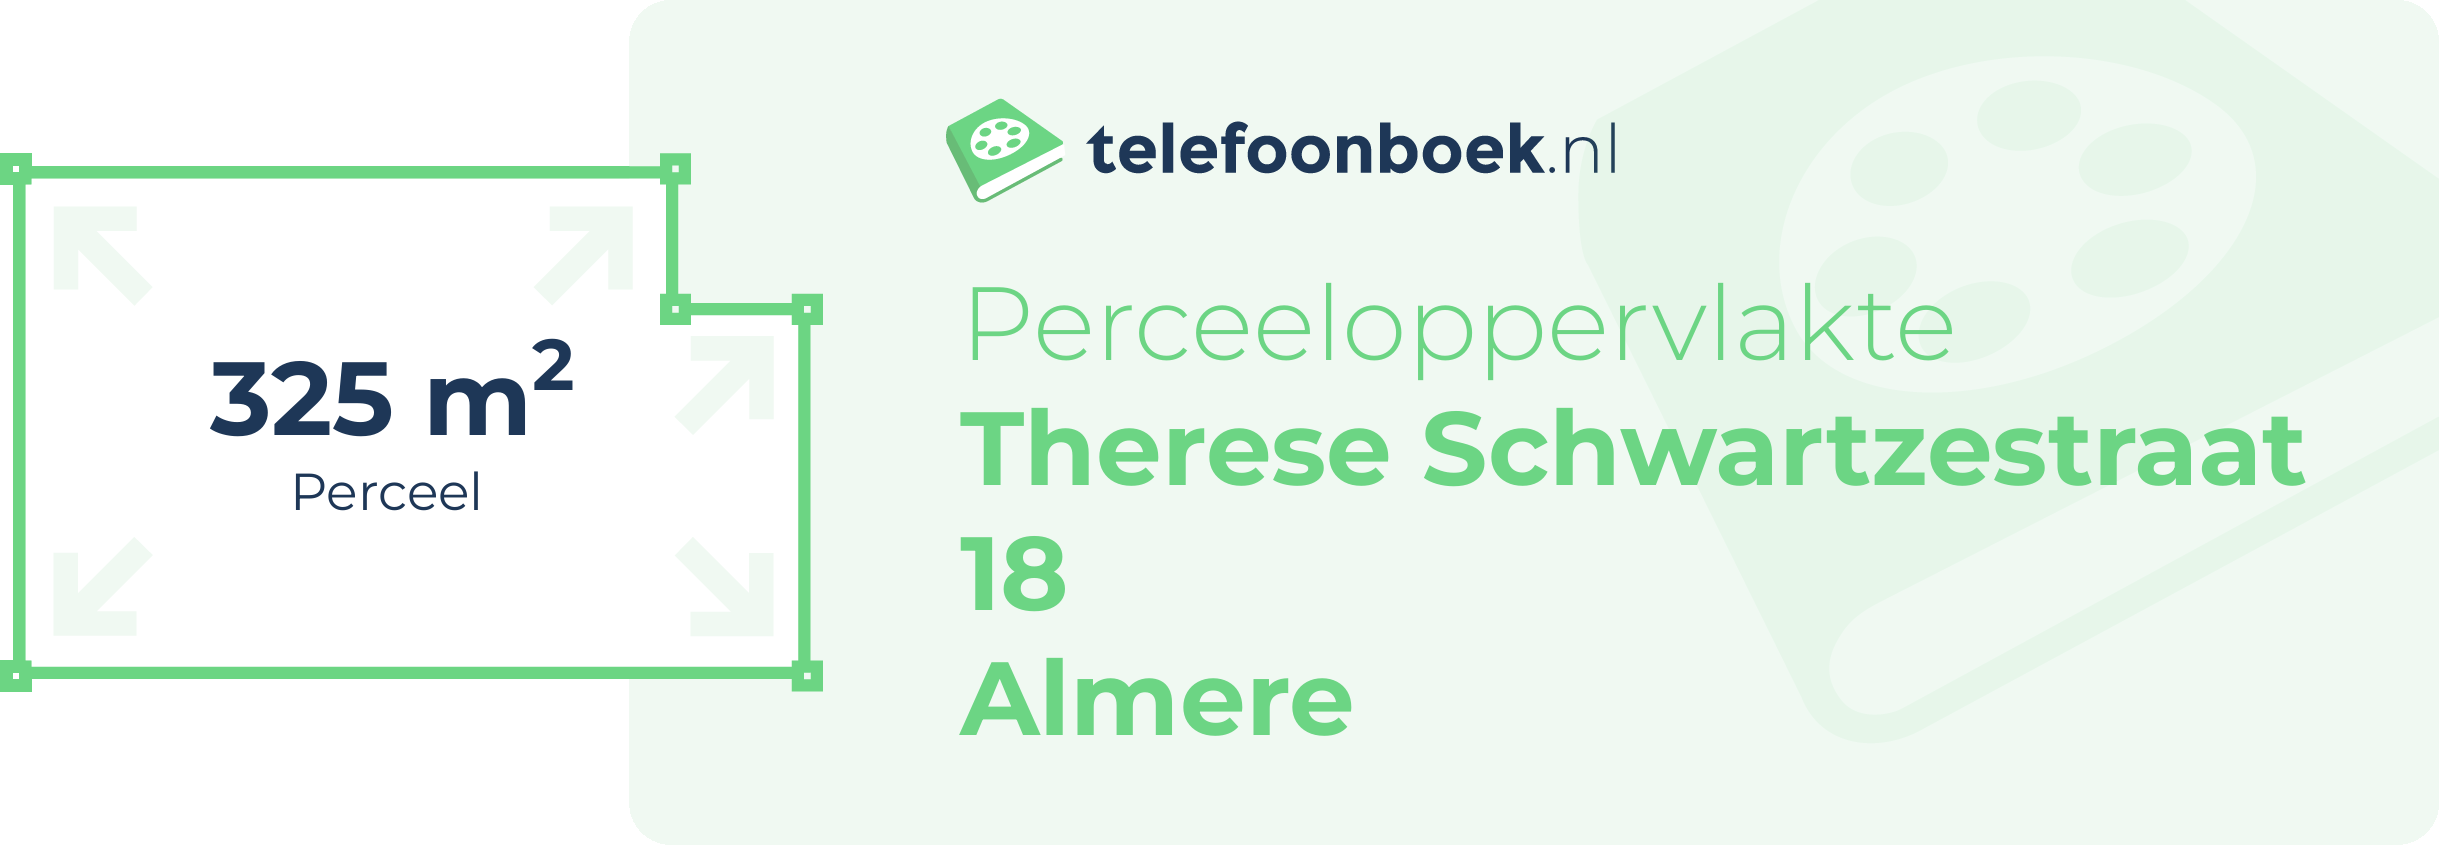 Perceeloppervlakte Therese Schwartzestraat 18 Almere